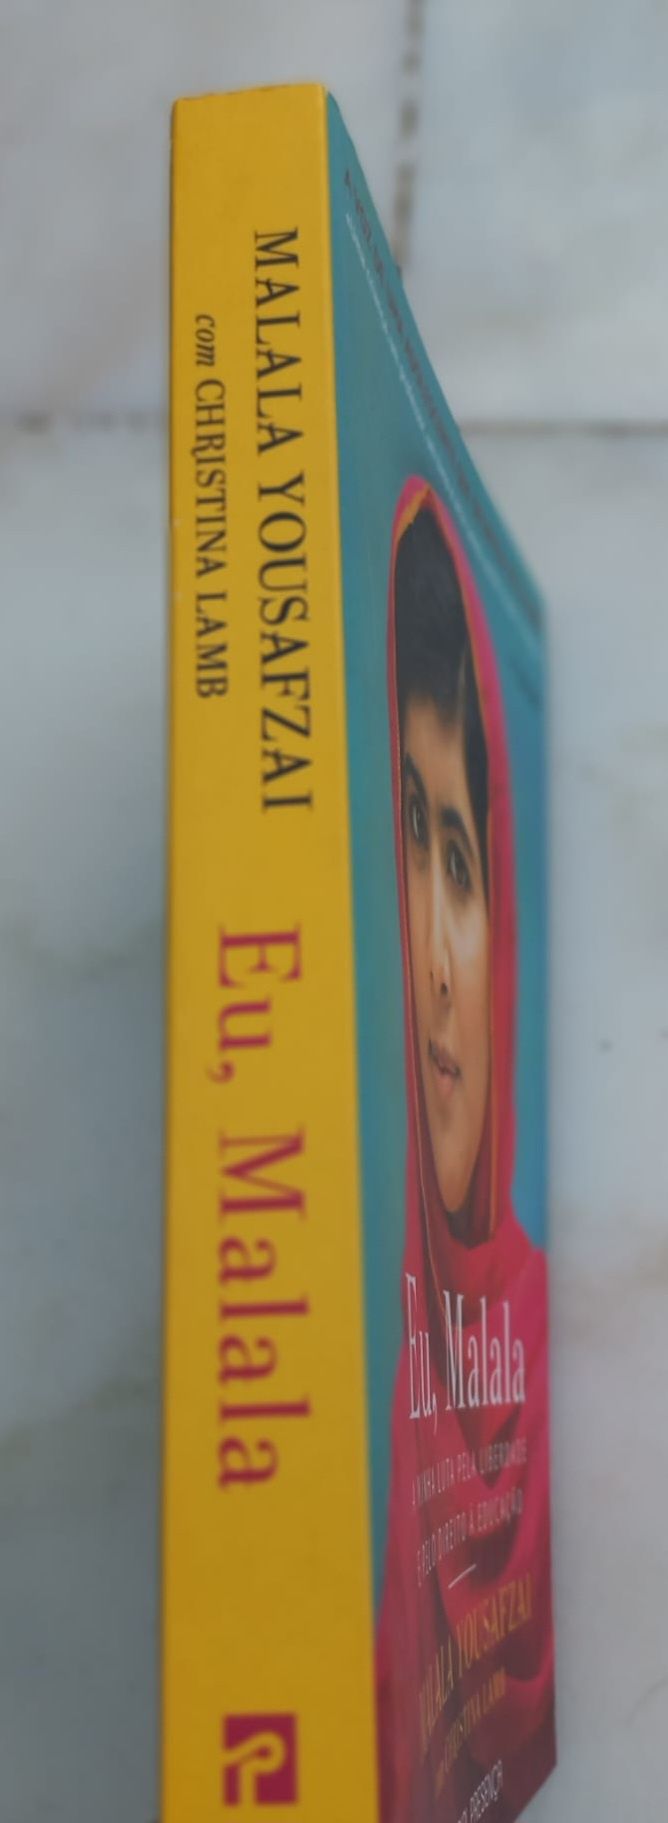 "Eu, Malala" - Malala Yousafzai